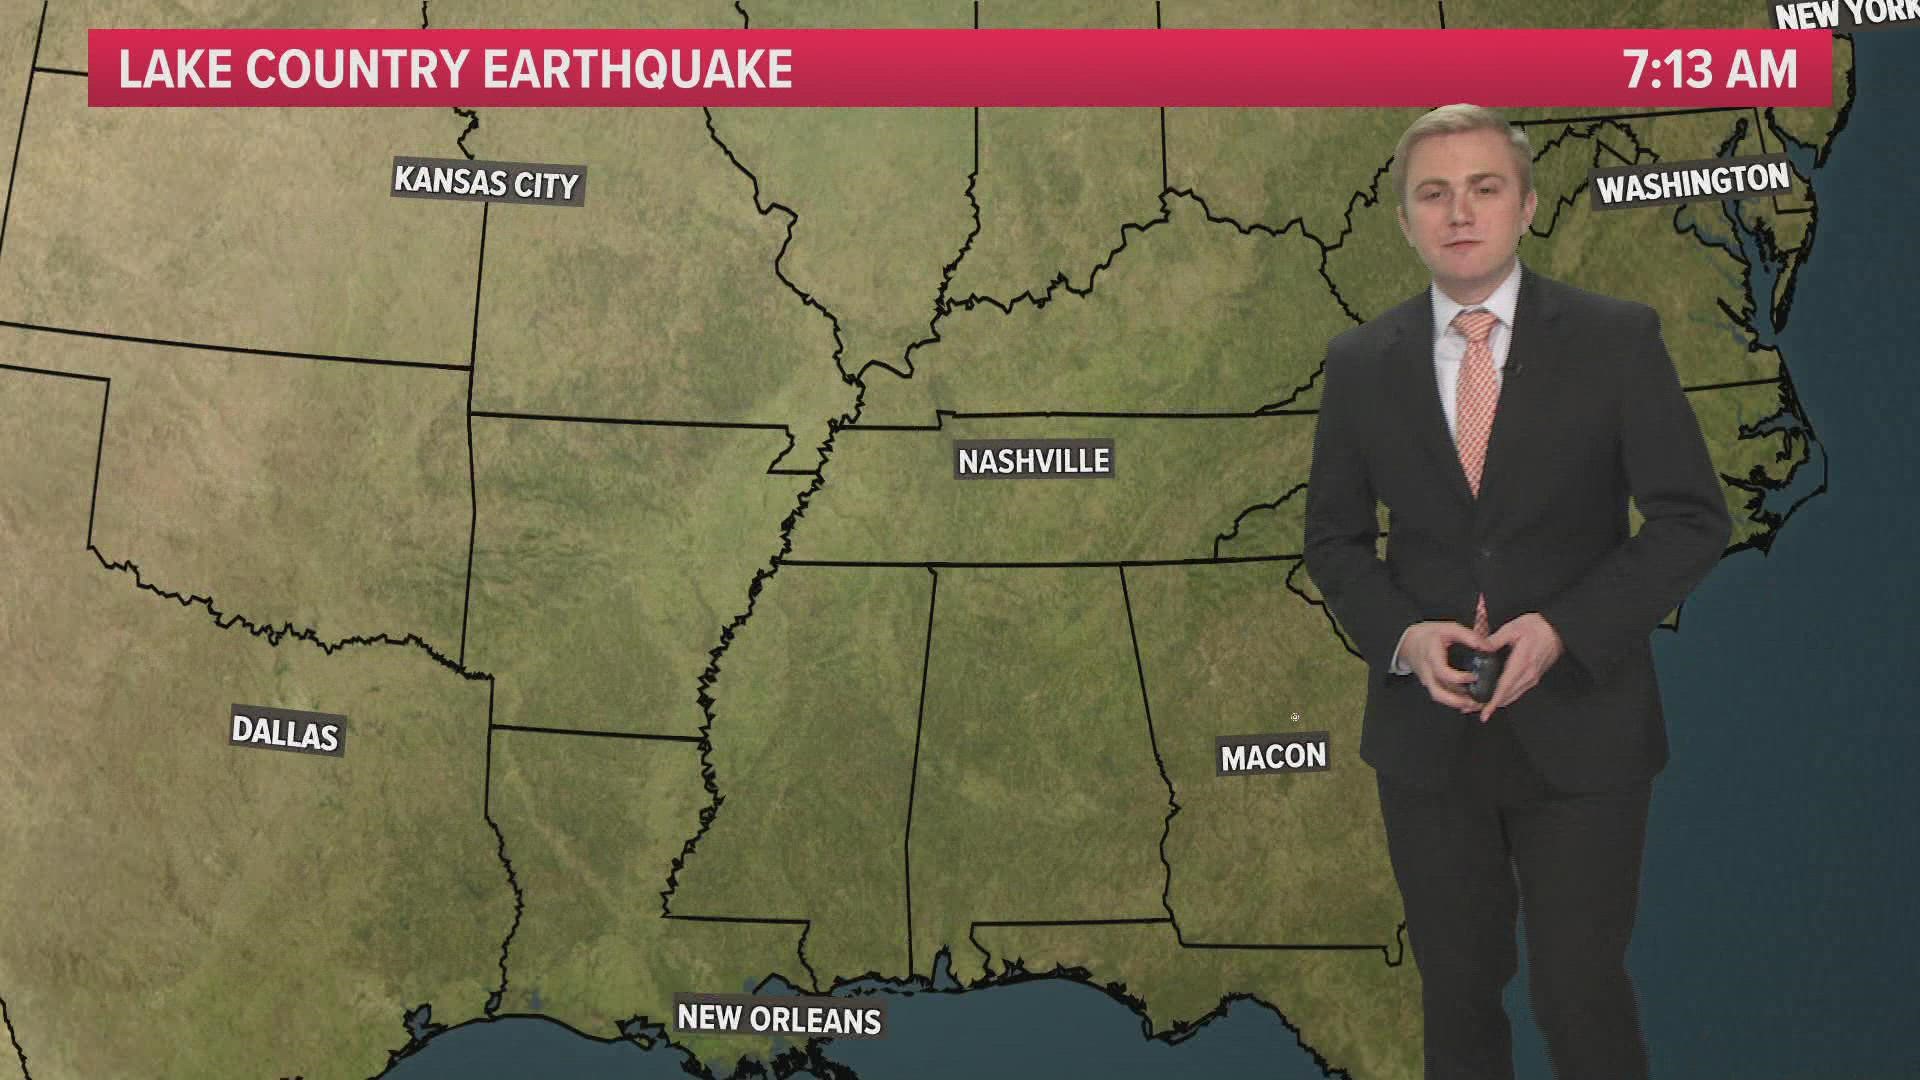 The USGS confirms an magnitude 2.2 earthquake struck southern Putnam County near Lake Sinclair.